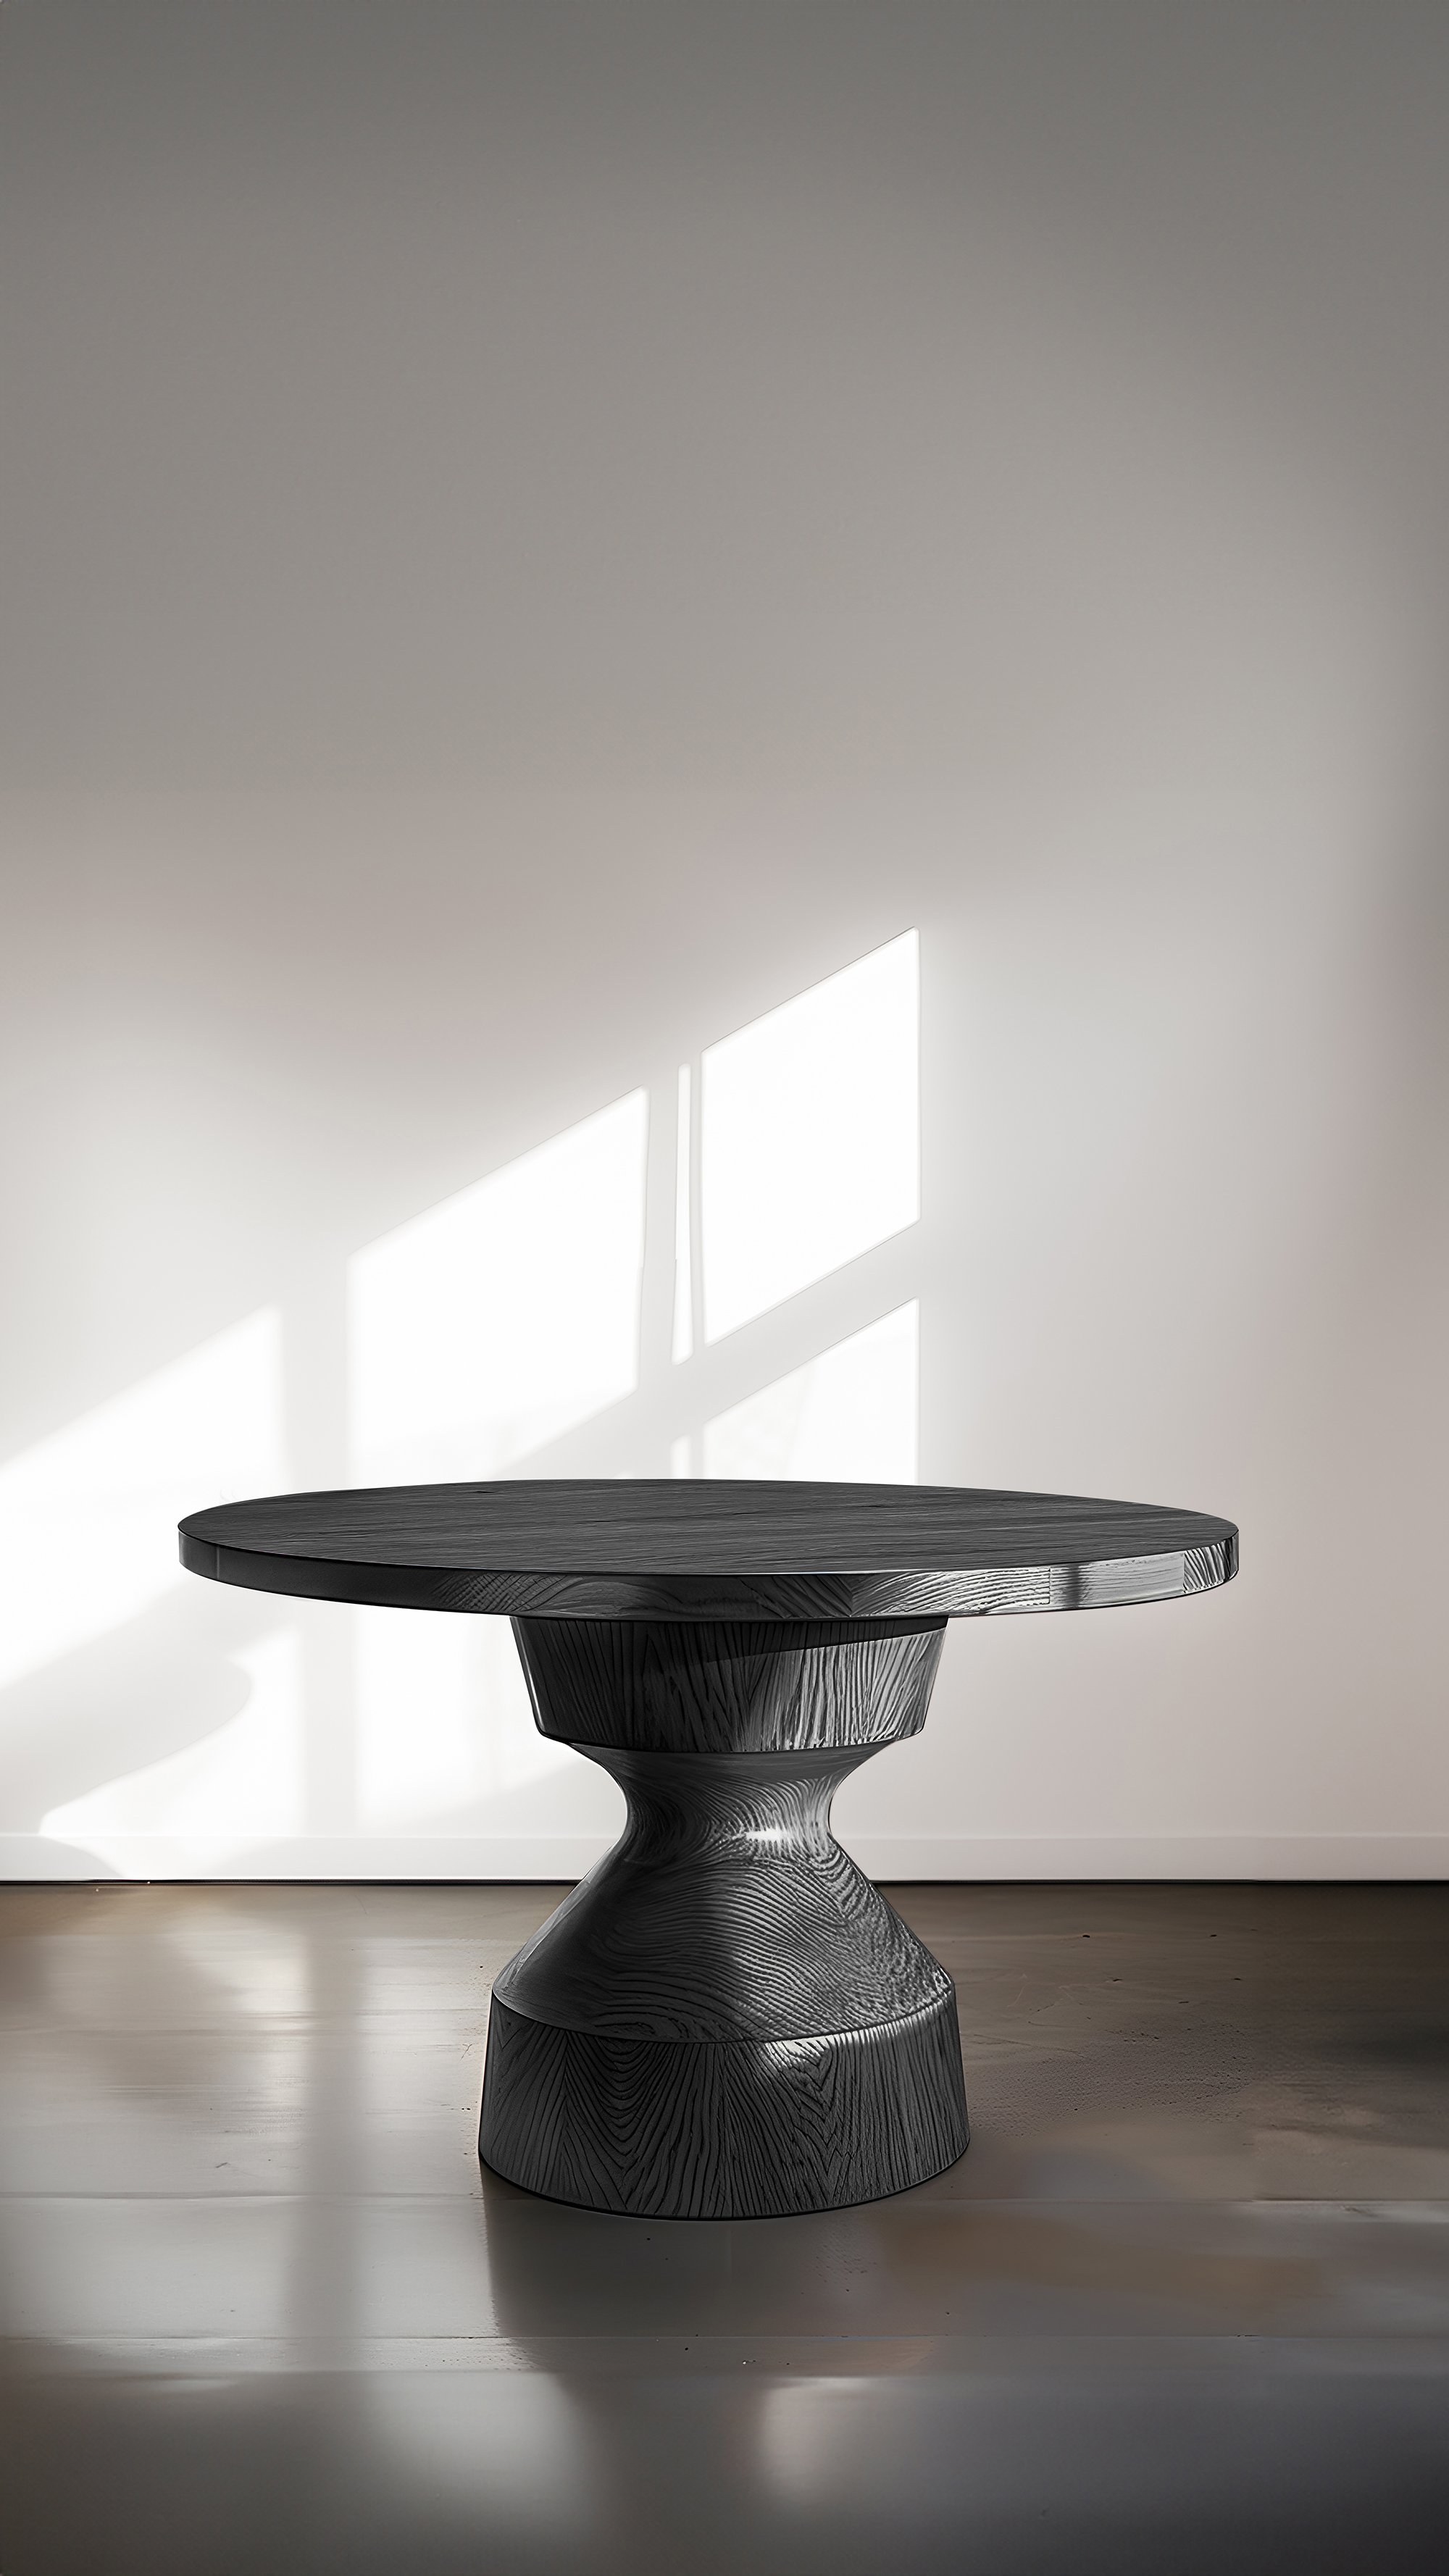 Socle by Joel Escalona, Black Wood Conference Tables, Design Meets Function No19 - 4.jpg